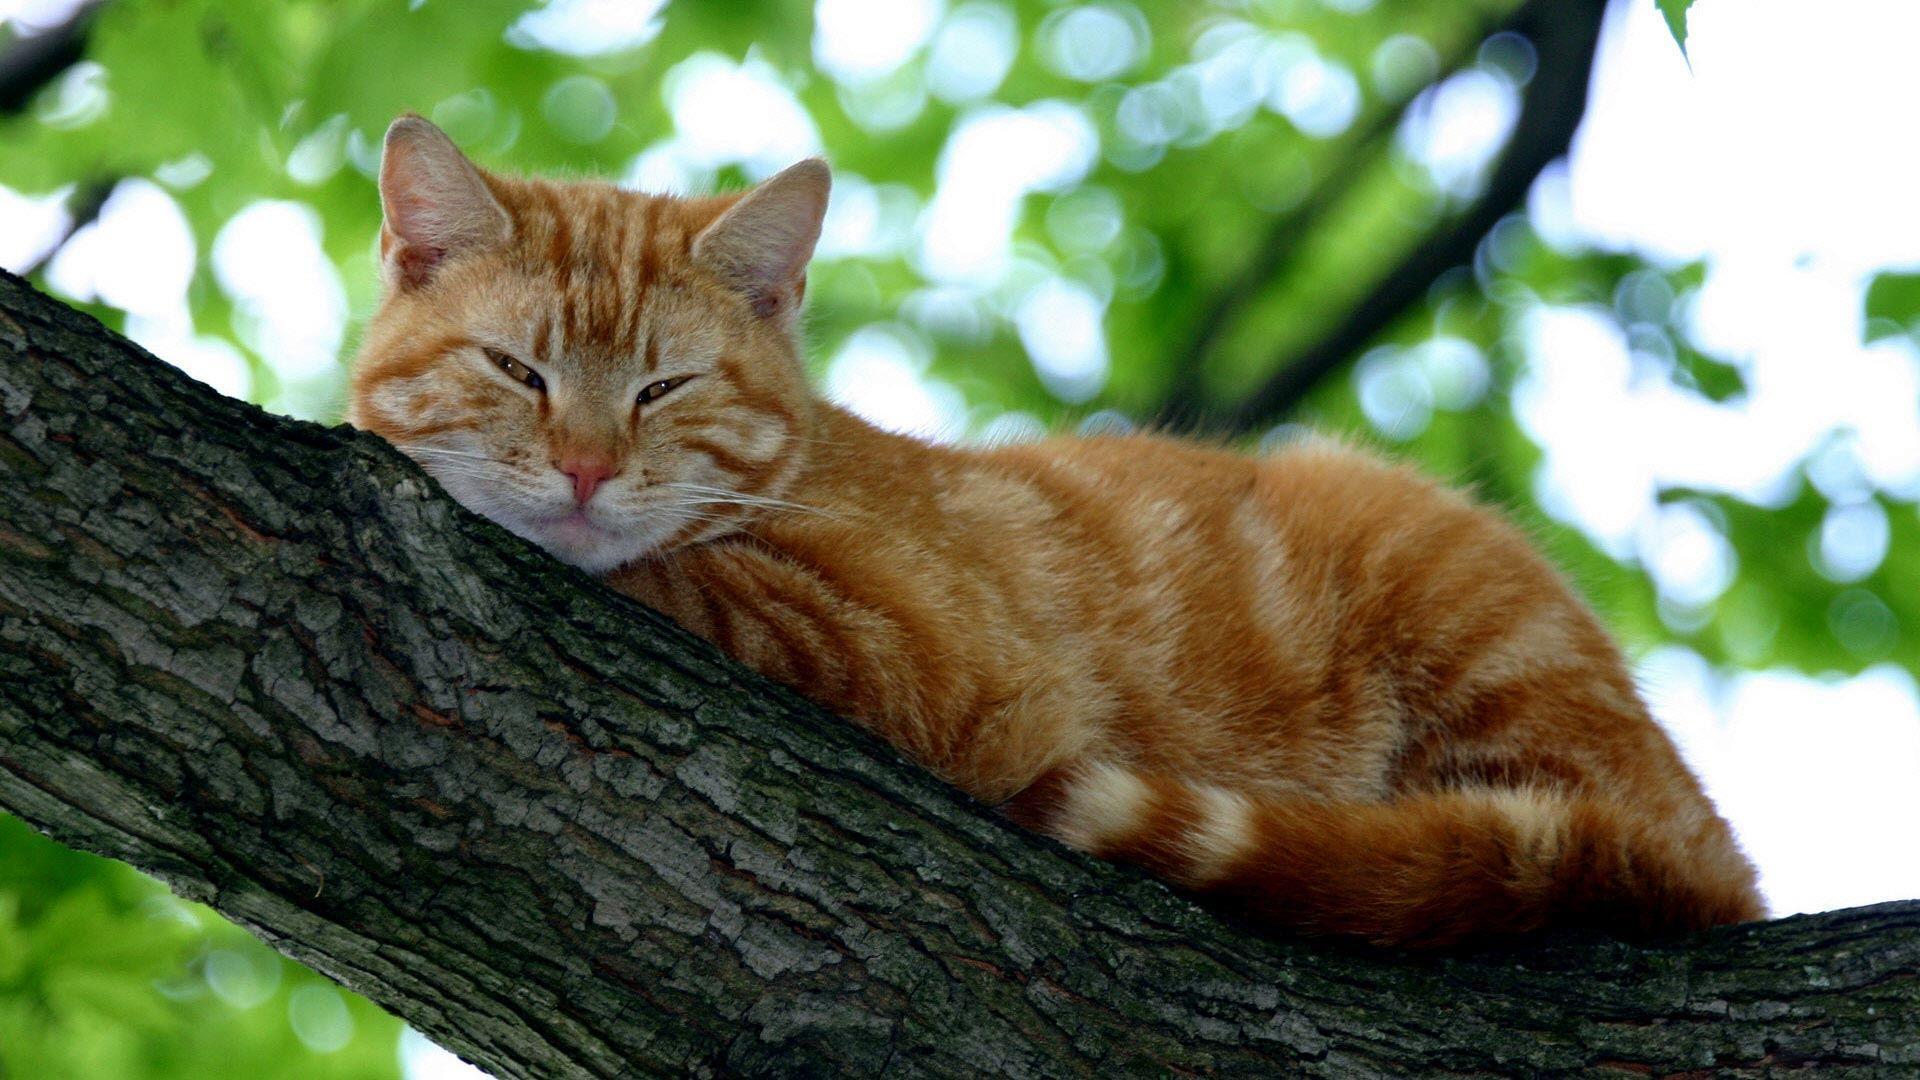 Full HD Cat Wallpaper ♥: Orange Cat in a Tree. Kitten picture, Cat wallpaper, Cats and kittens